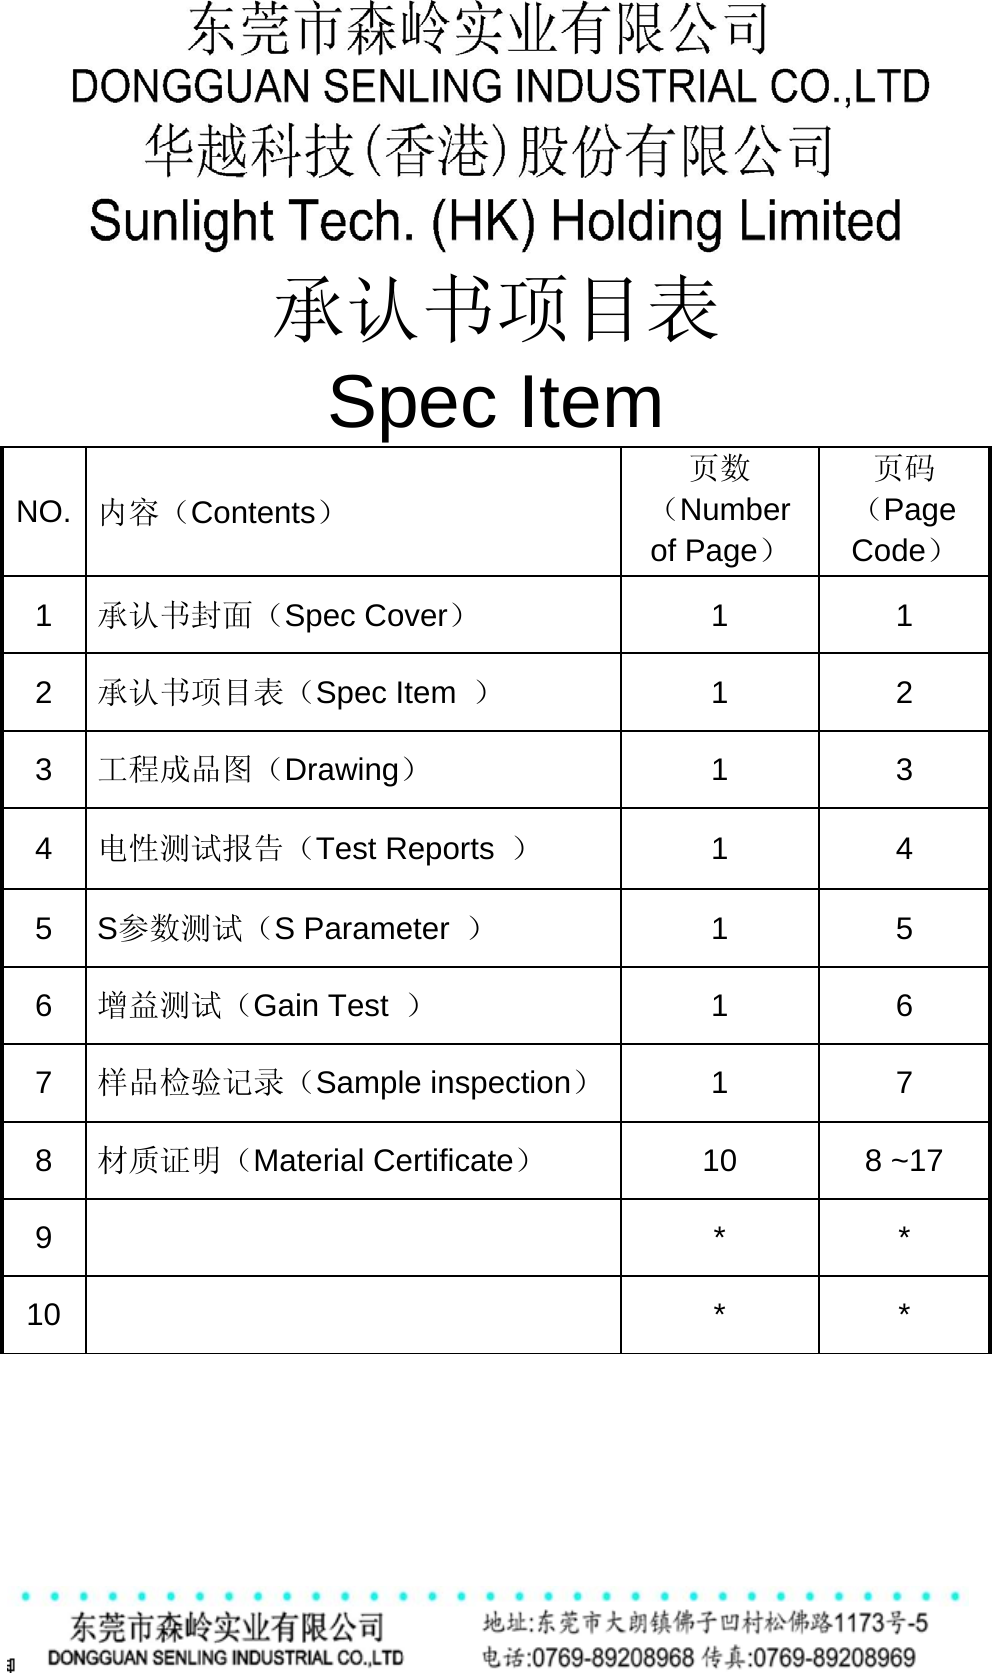           承认书项目表 Spec Item      NO.  内容（Contents） 页数（Number of Page） 页码（Page Code） 1   承认书封面（Spec Cover）  1   1  2   承认书项目表（Spec Item  ）  1   2  3   工程成品图（Drawing）  1   3  4   电性测试报告（Test Reports  ）  1   4  5   S参数测试（S Parameter  ）  1   5  6   增益测试（Gain Test  ） 1  6 7   样品检验记录（Sample inspection）1 7 8   材质证明（Material Certificate） 10 8 ~17 9     *  * 10     *  * 